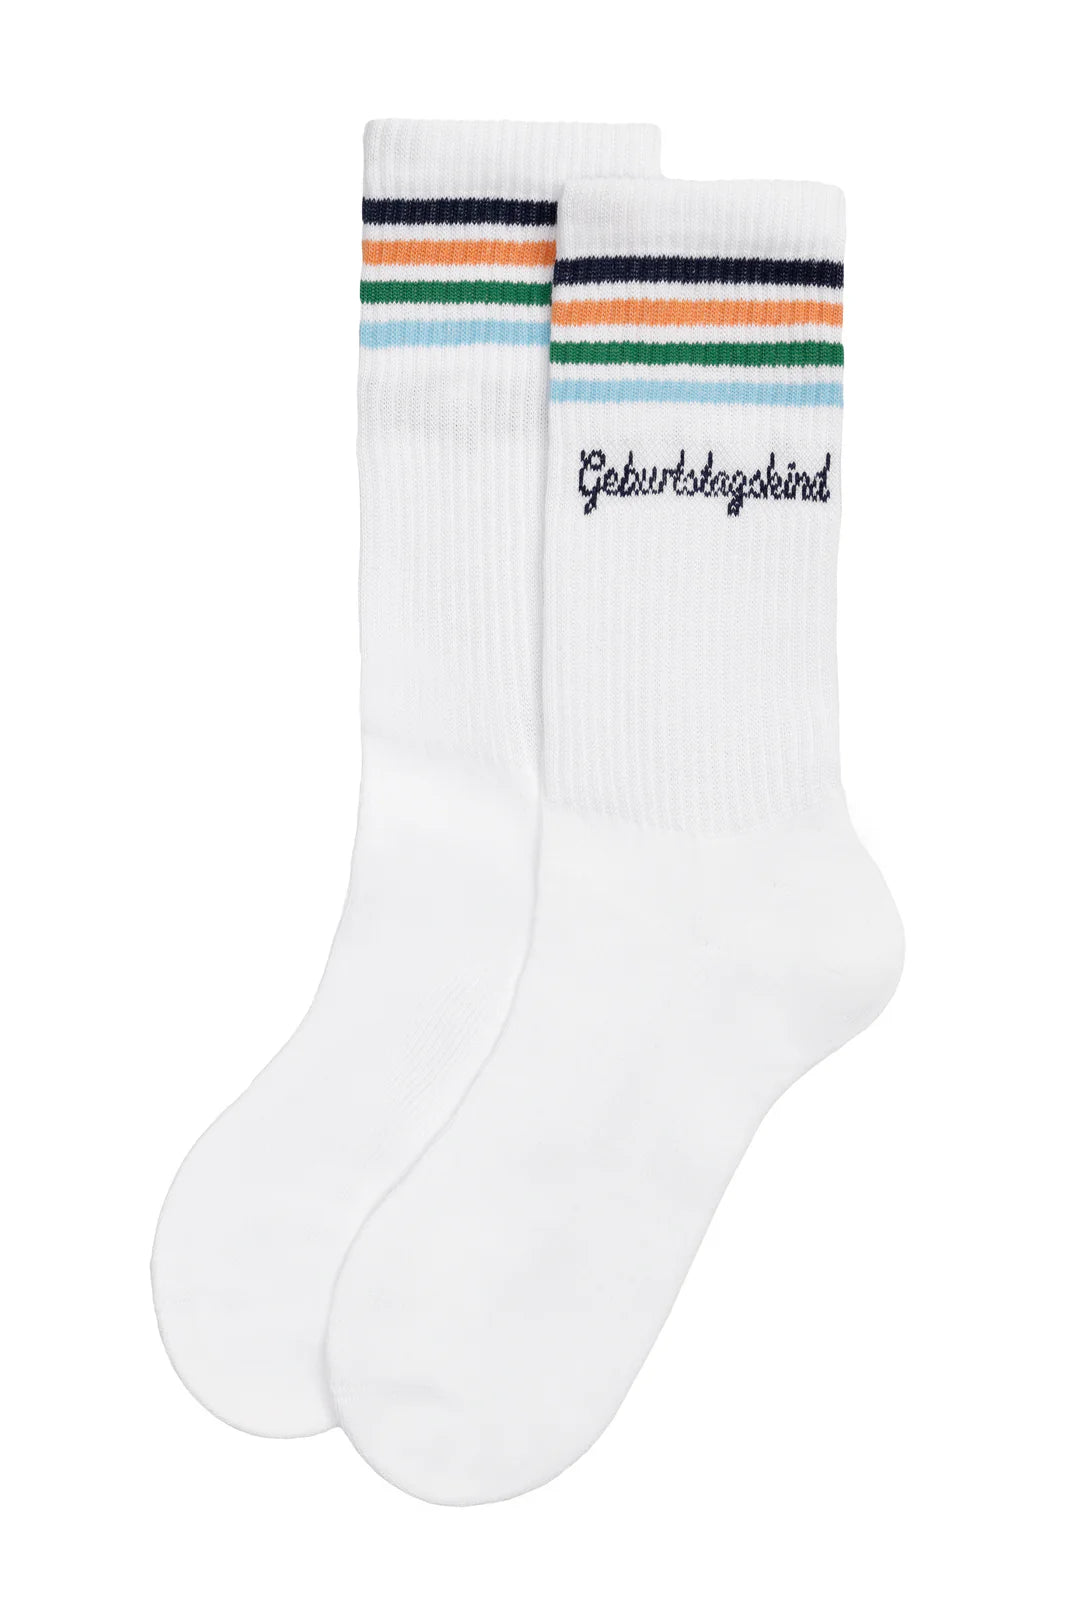 Geburtstagskind – Socken ADULTS